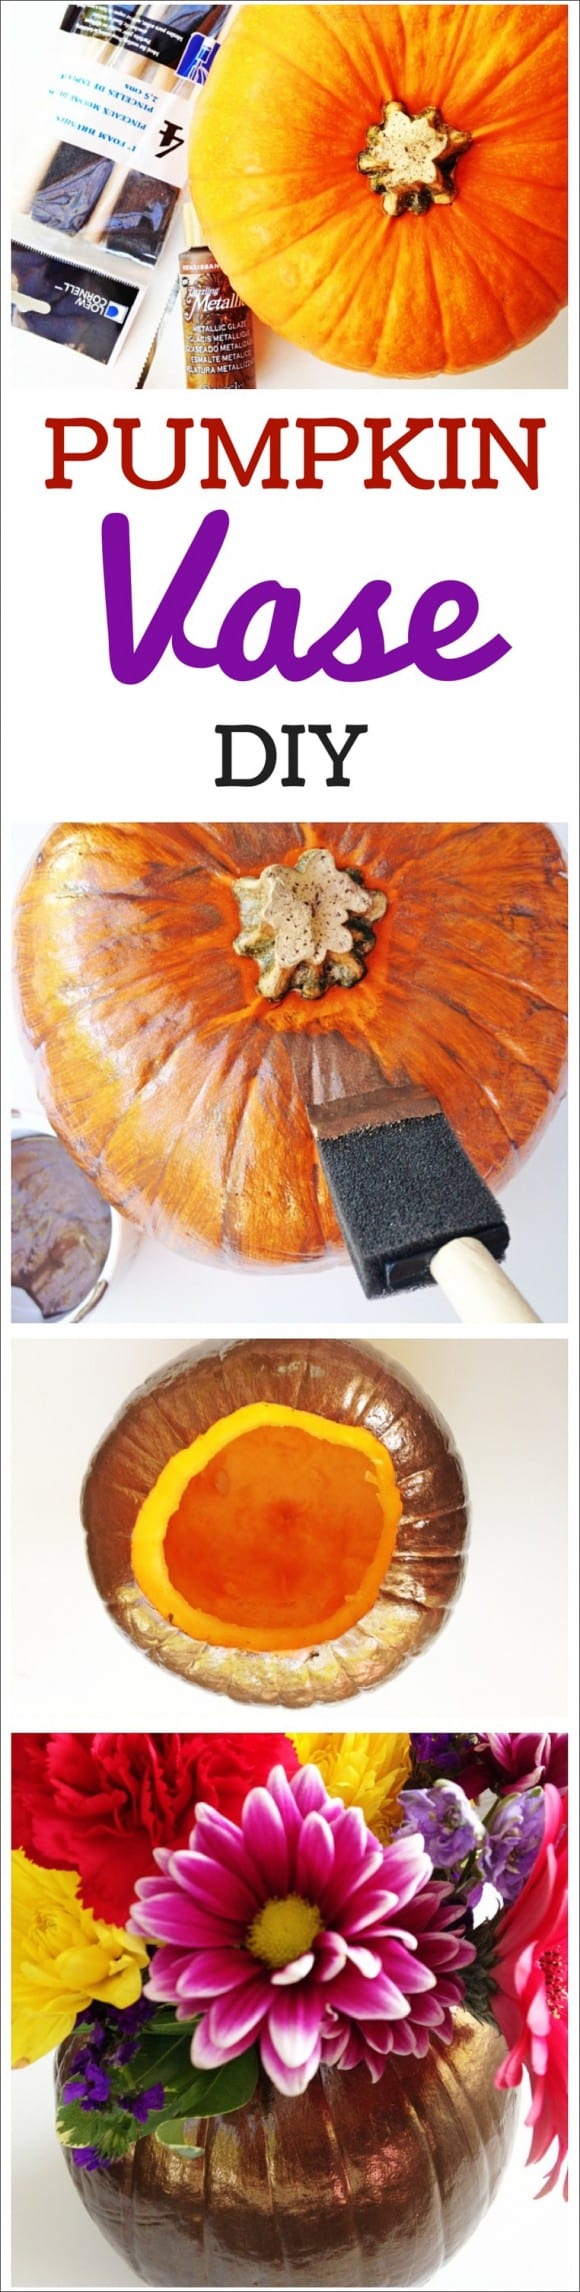 Pumpkin vase DIY for Thanksgiving | CatchMyParty.com